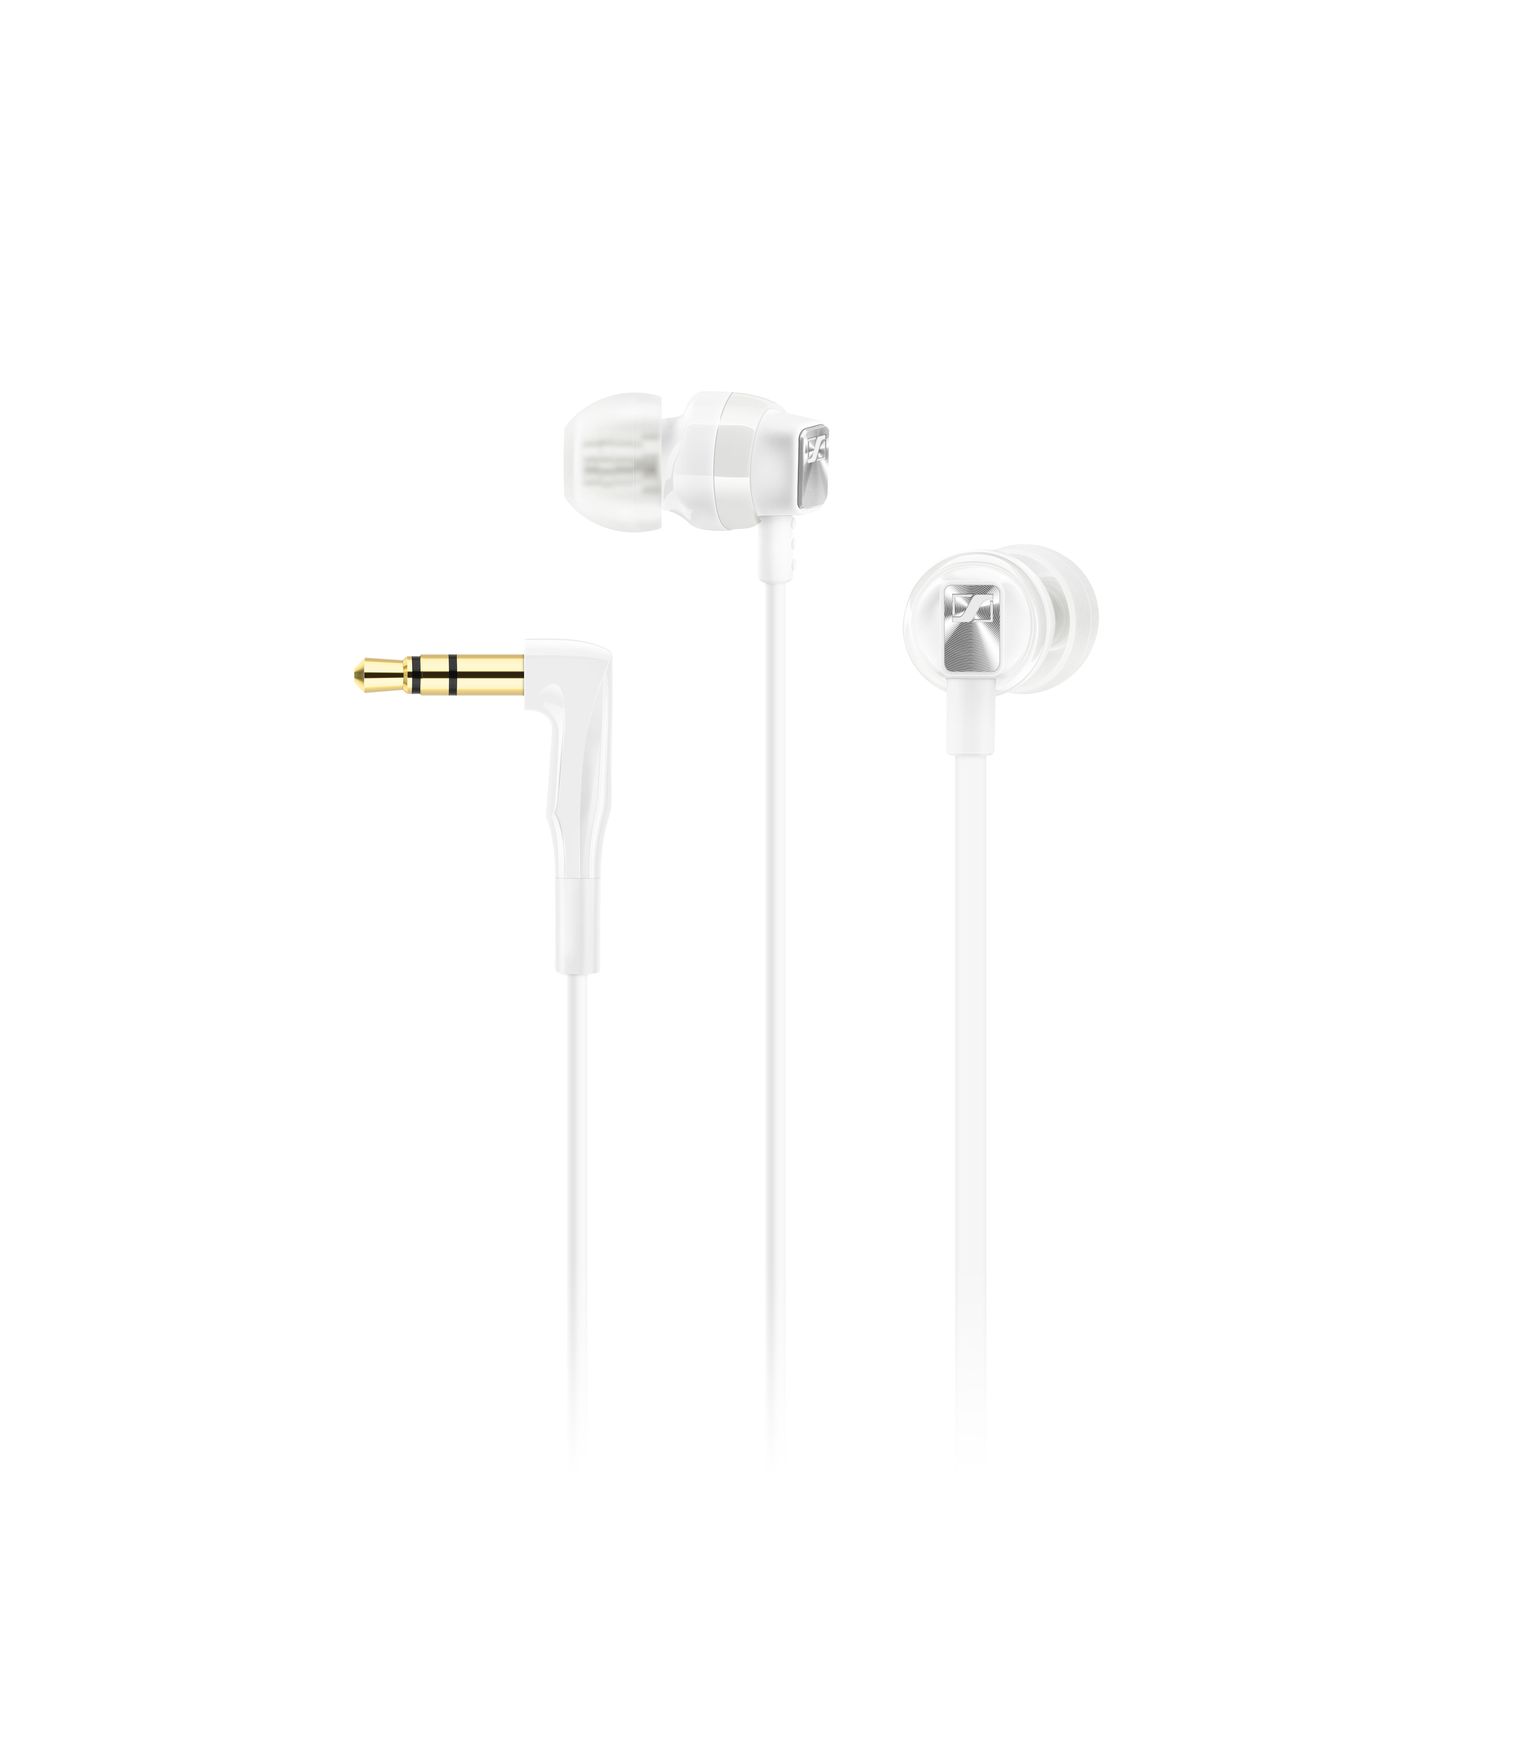 CX In-Ear Headphone Range